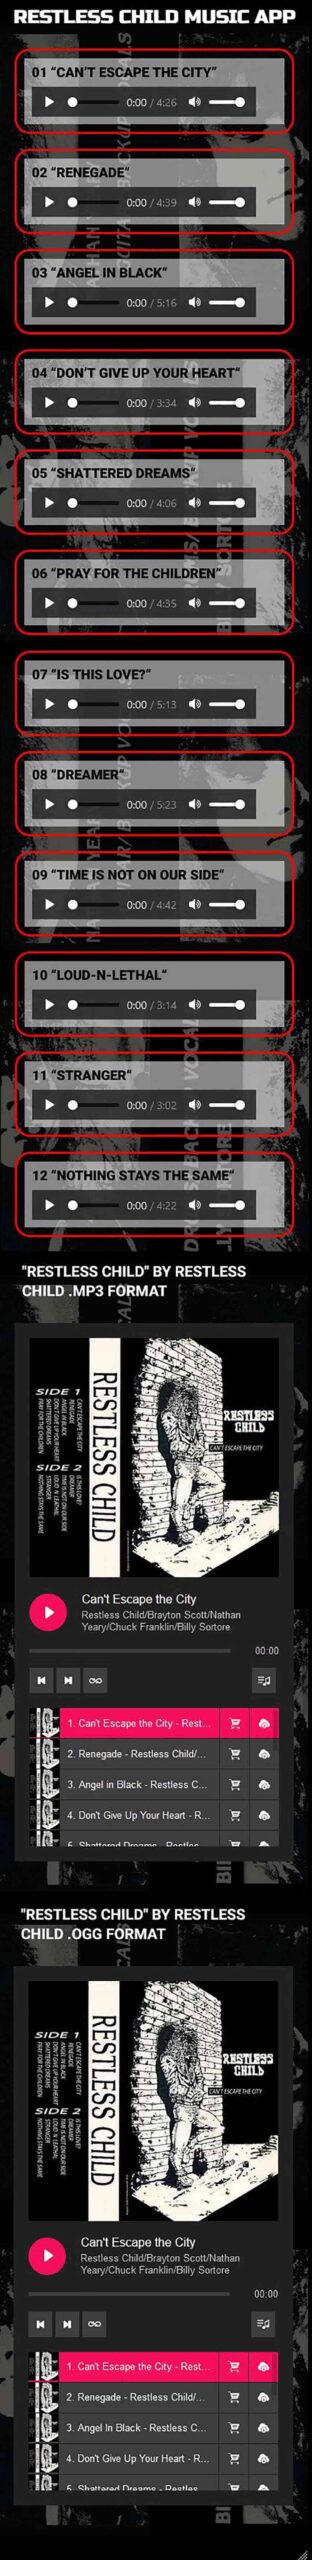 Image of Restless Child Album in App Site 1989 Album, 12 songs $2.99 Dueling Worlds© International